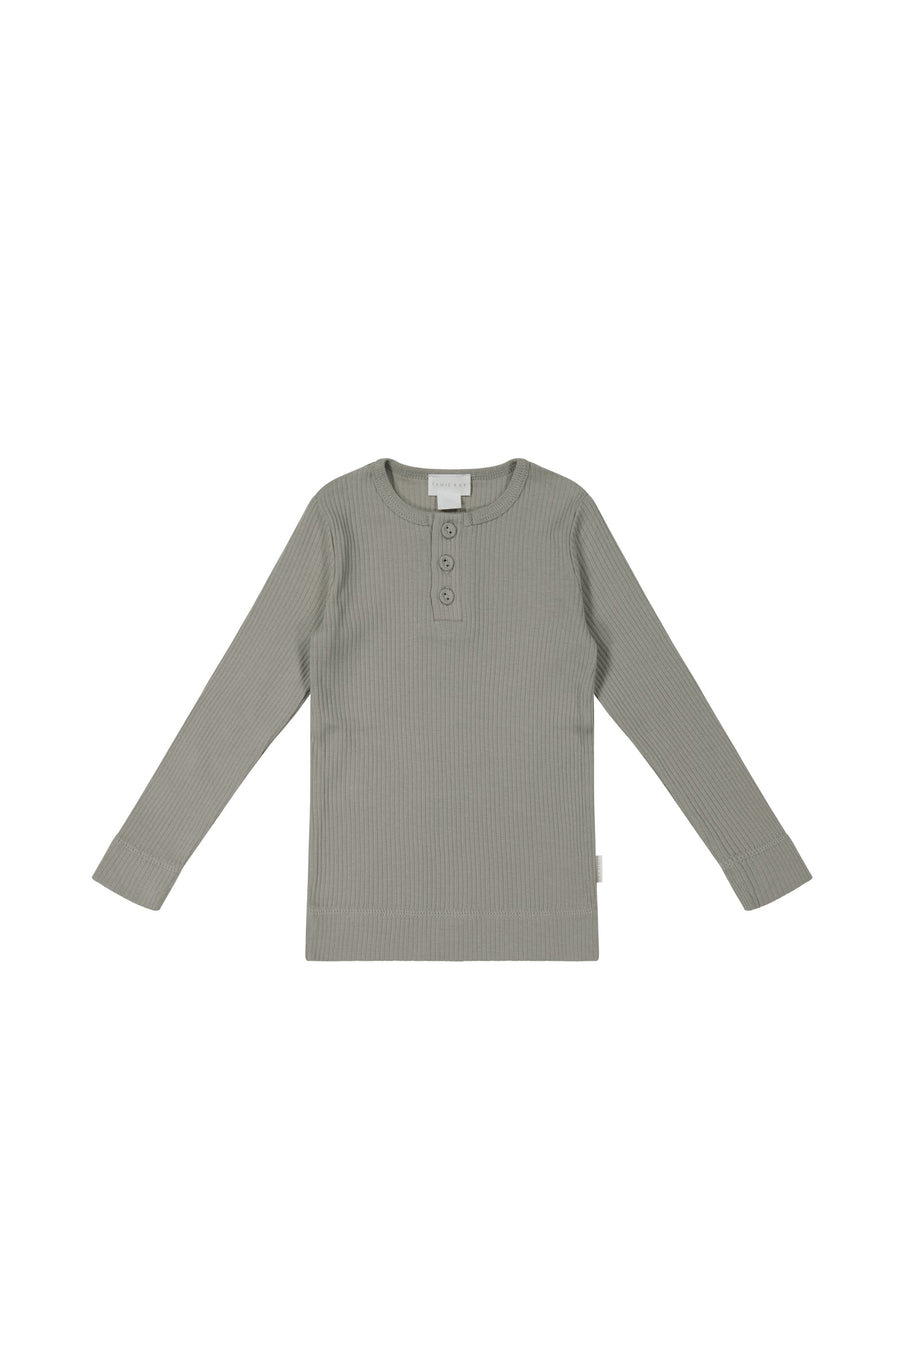 Organic Cotton Modal Long Sleeve Henley - Shale Gray